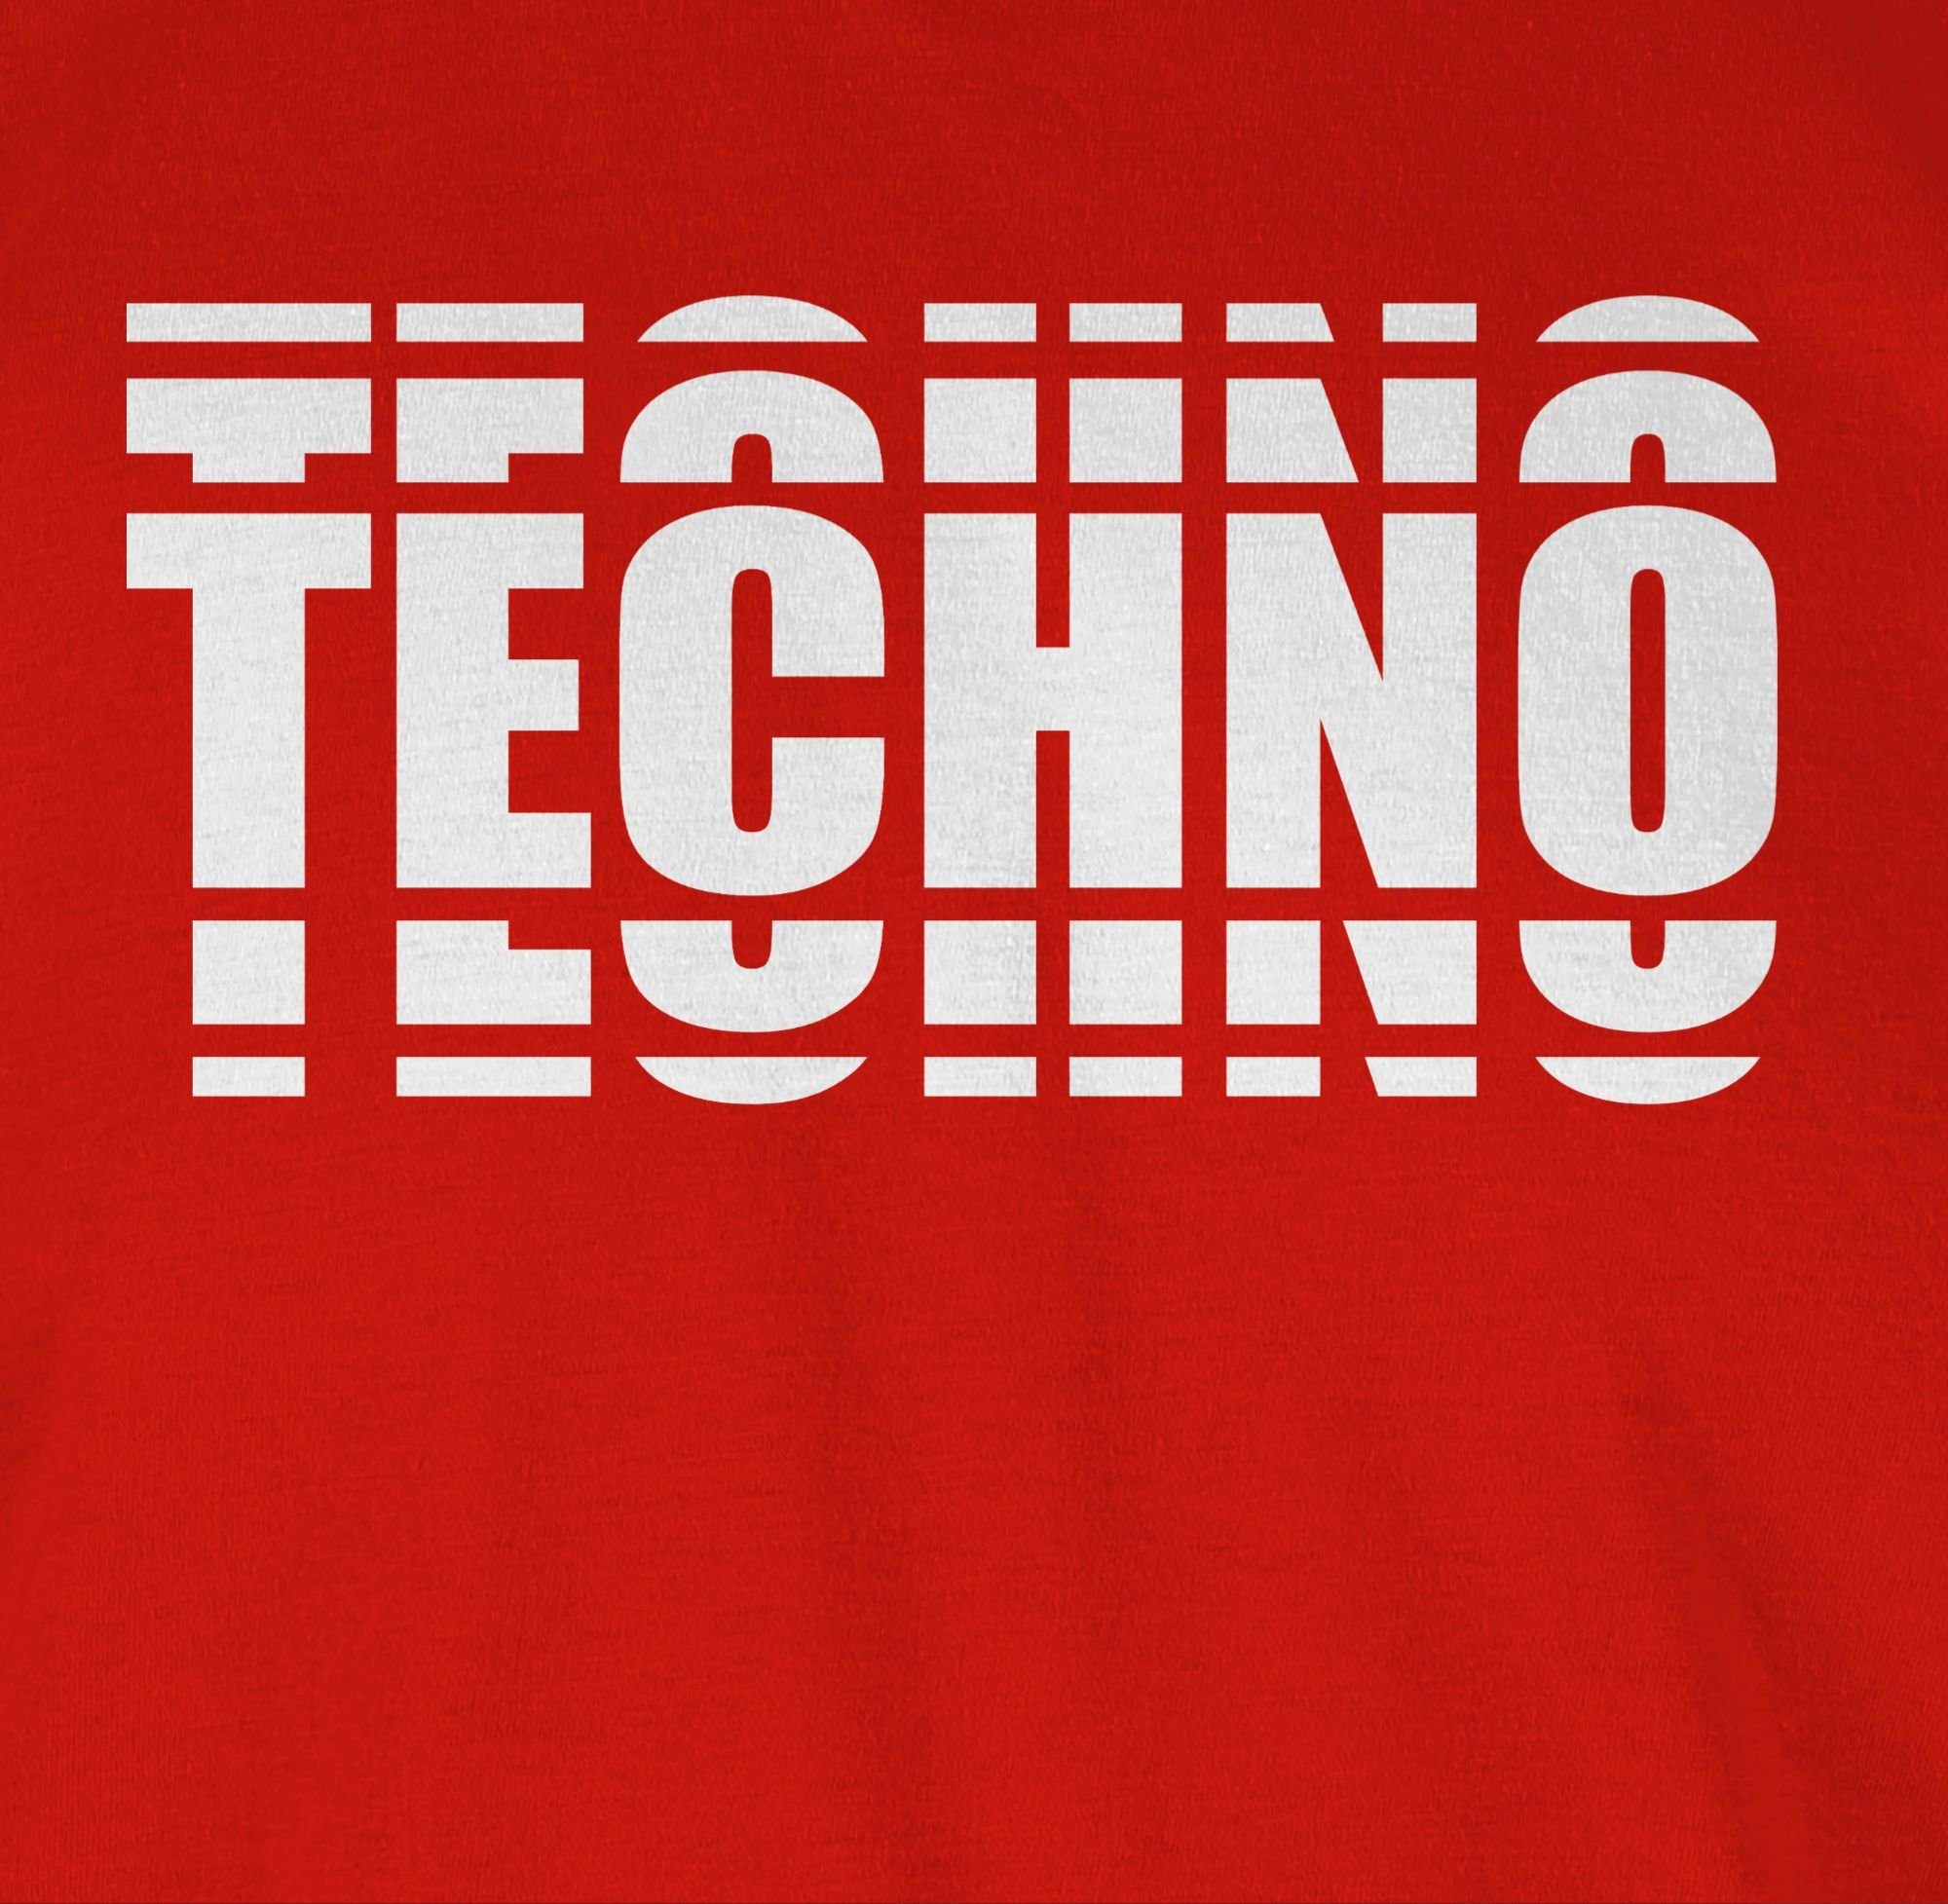 Muster Grafischem Techno in Shirtracer Zubehör Rot Festival T-Shirt 03